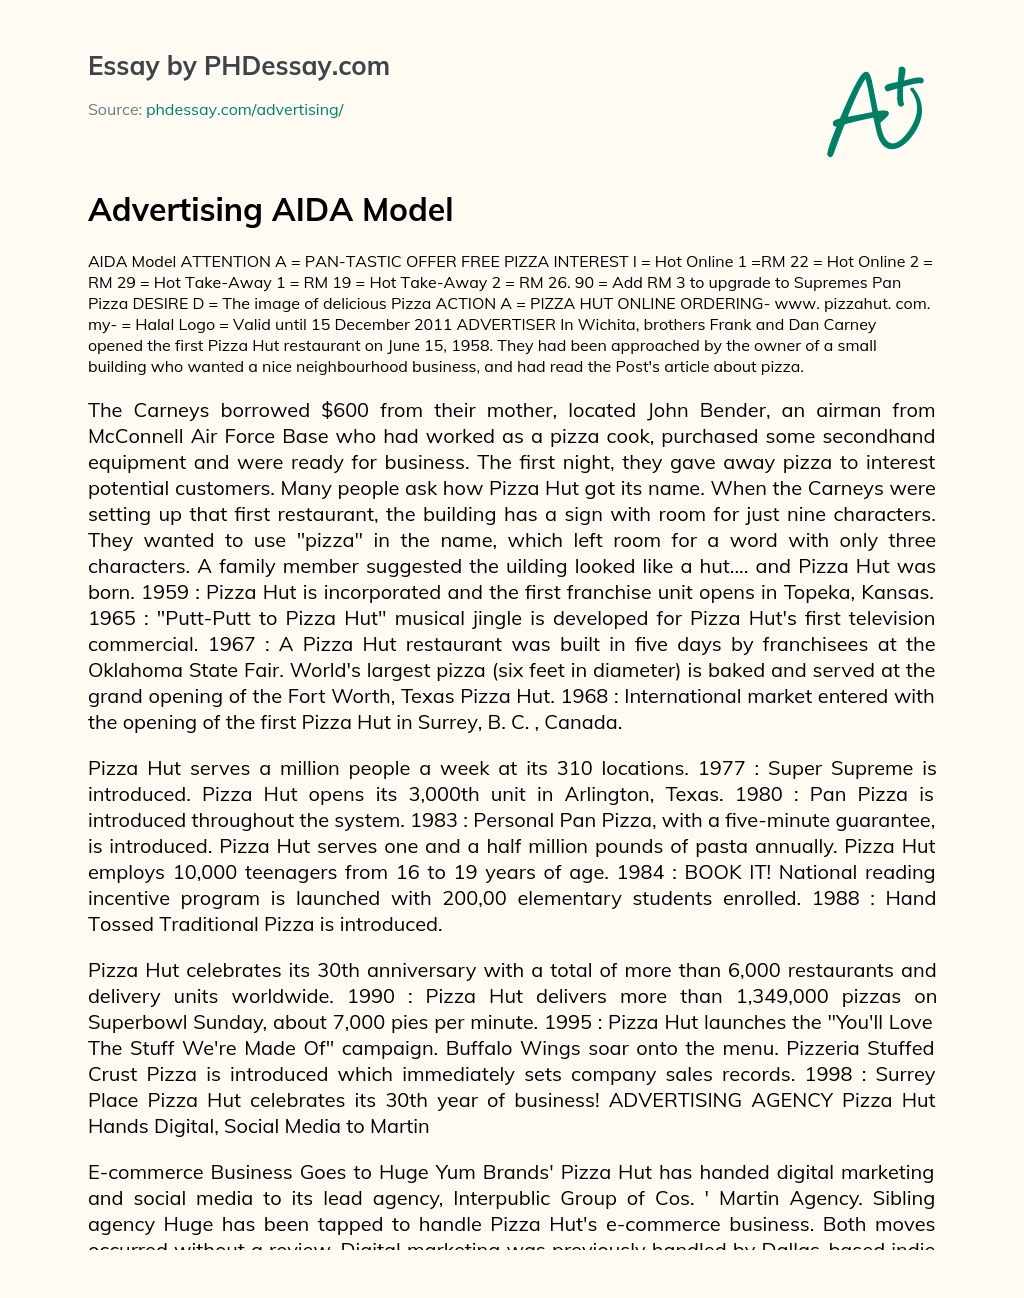 Advertising AIDA Model essay